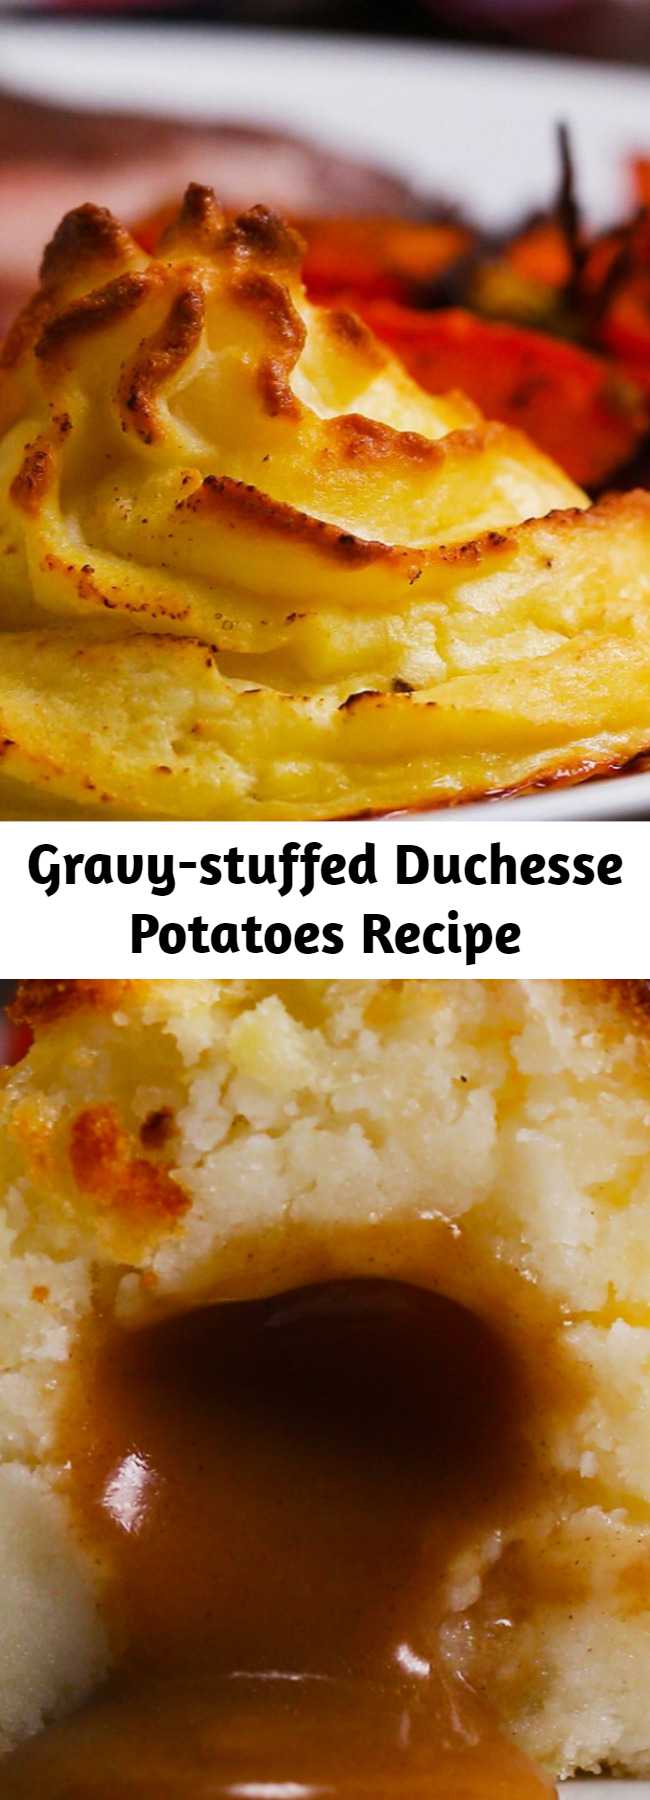 Gravy-stuffed Duchesse Potatoes Recipe